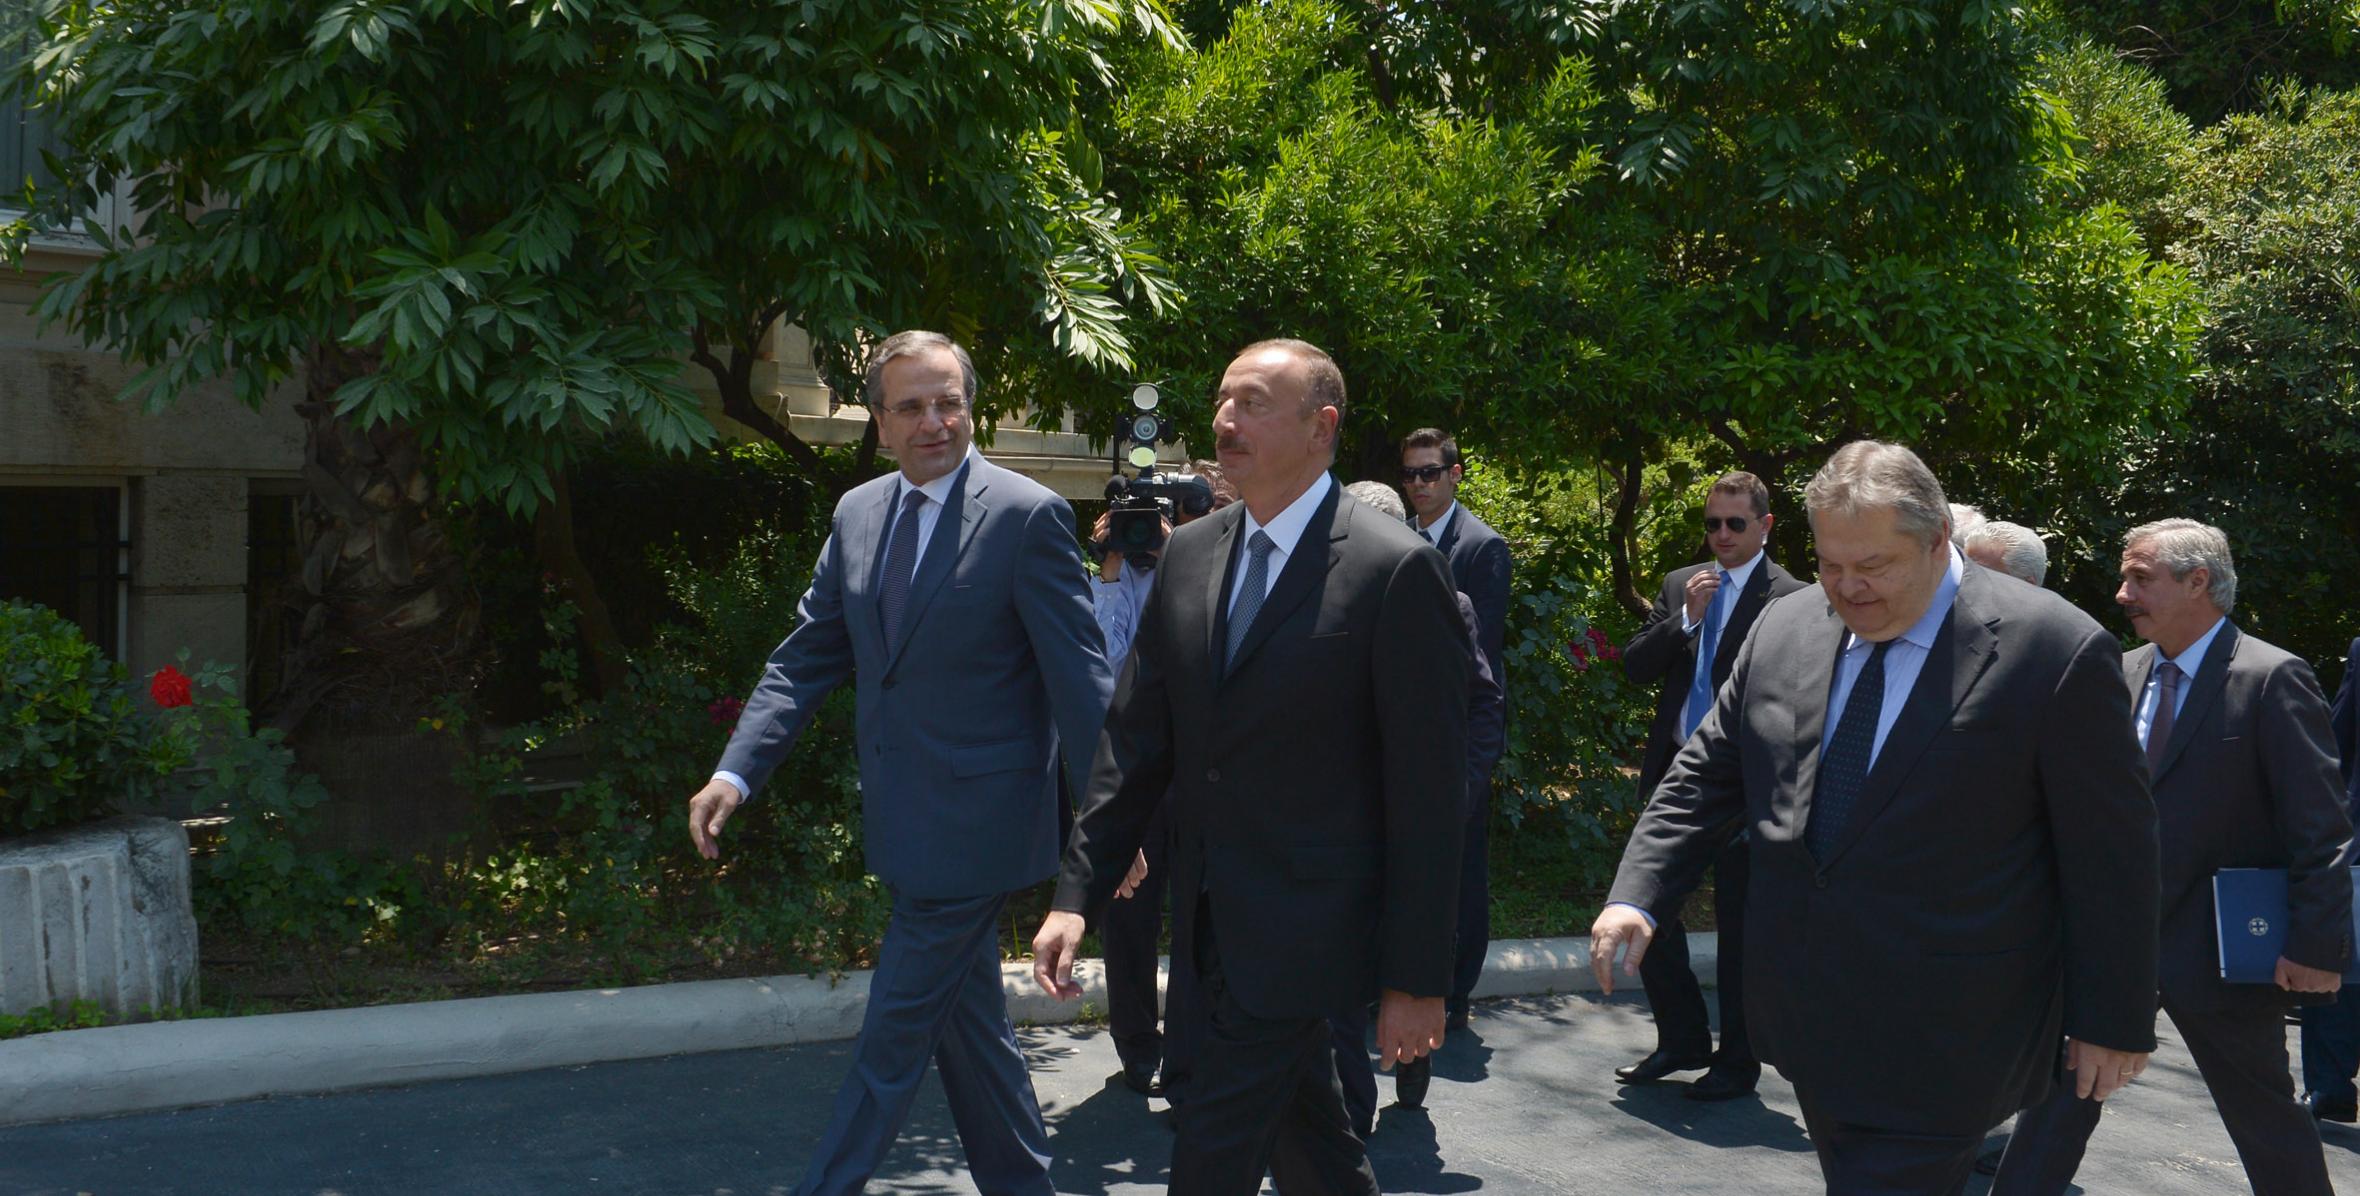 Ilham Aliyev met with Prime Minister of Greece Antonis Samaras